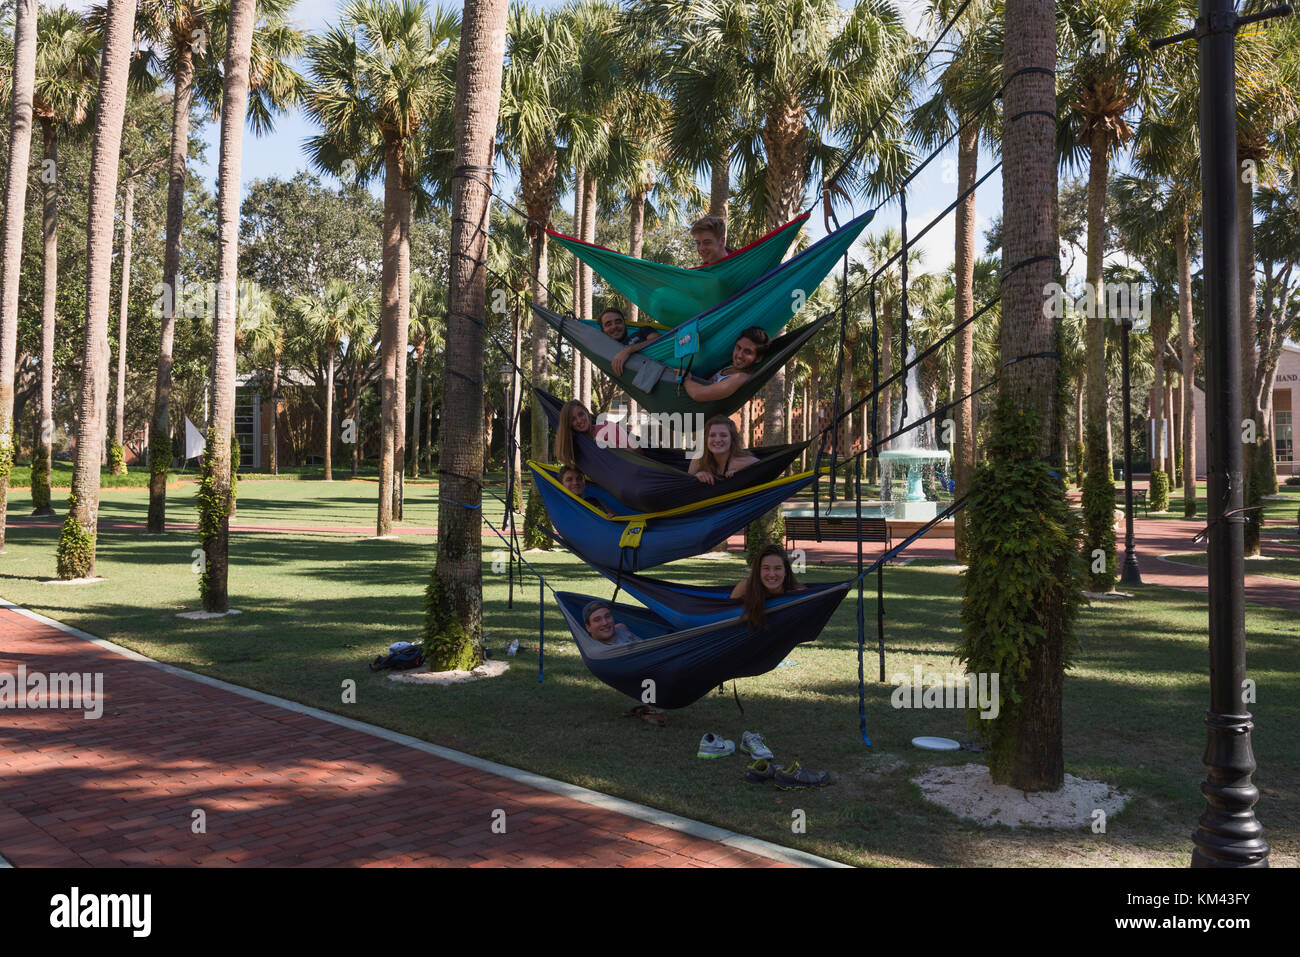 Students at Stetson University Deland, Florida taking a break between